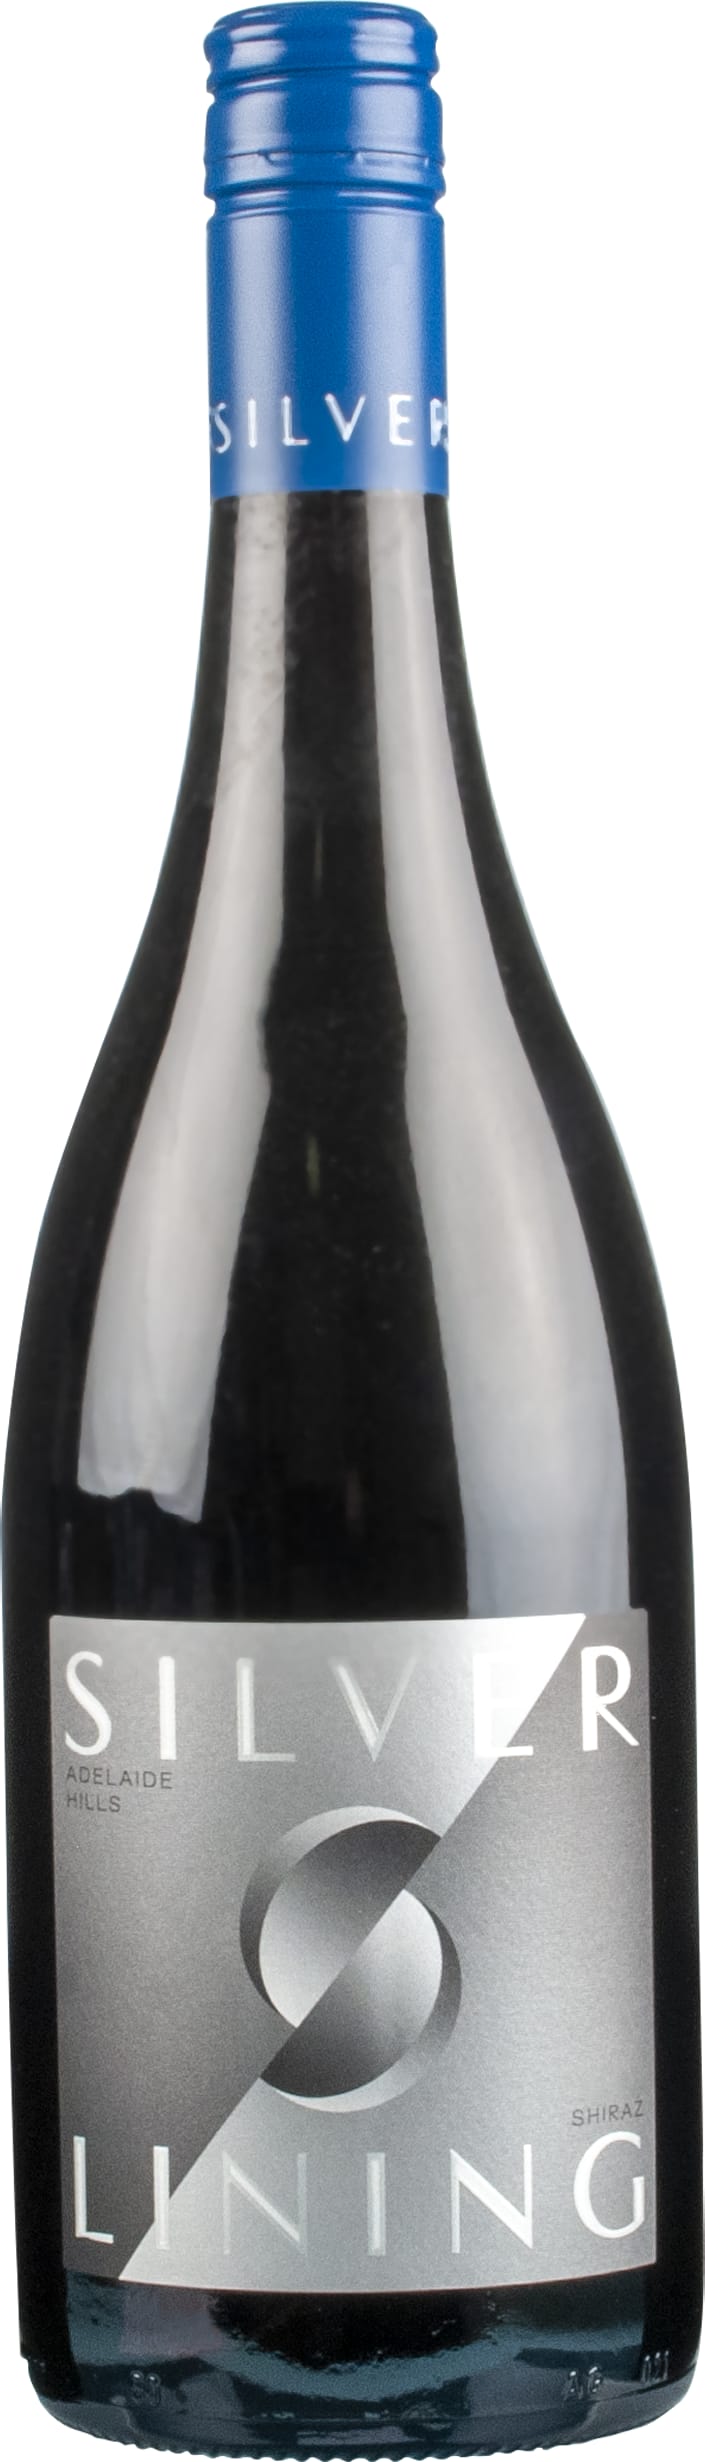 Silver Lining Wine Co Shiraz 2020 75cl - Buy Silver Lining Wine Co Wines from GREAT WINES DIRECT wine shop